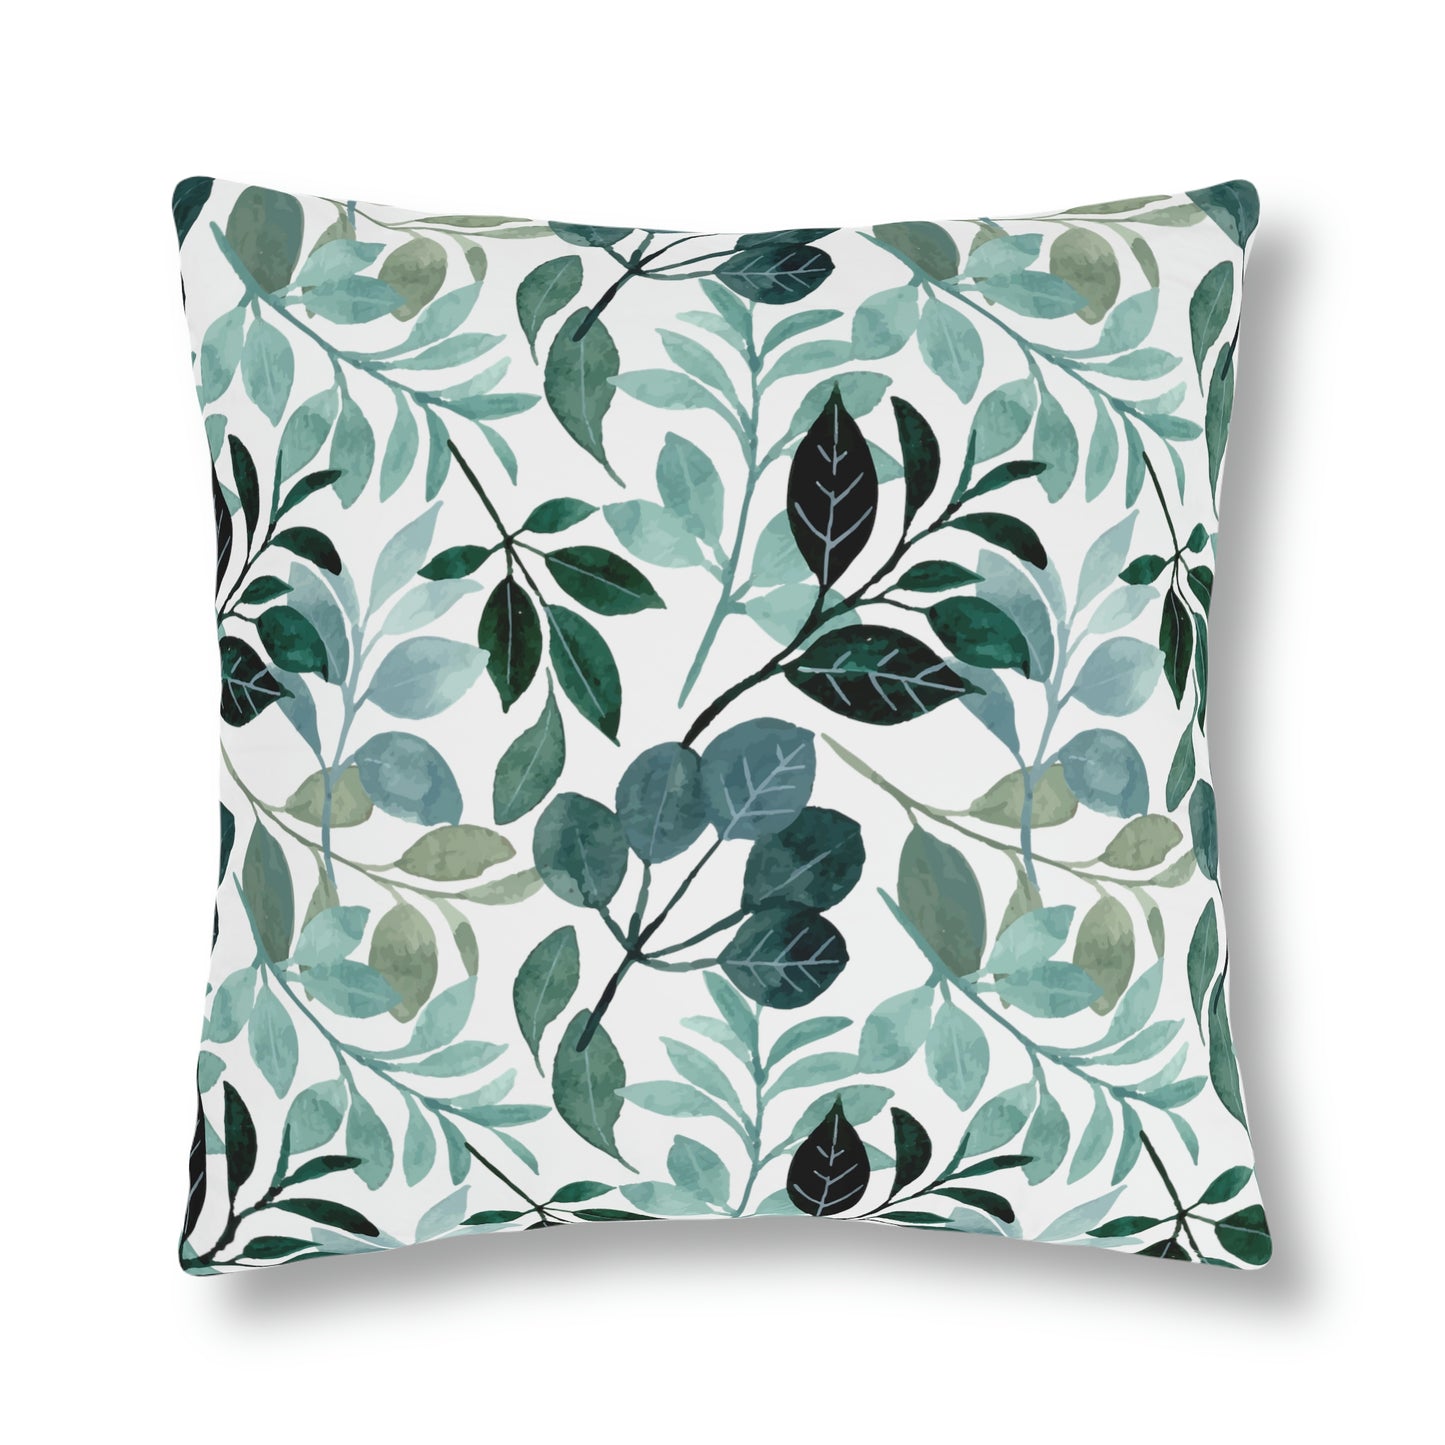 Floral Pillow / Teal Outdoor Waterproof Pillow / Leaf Print Pillow